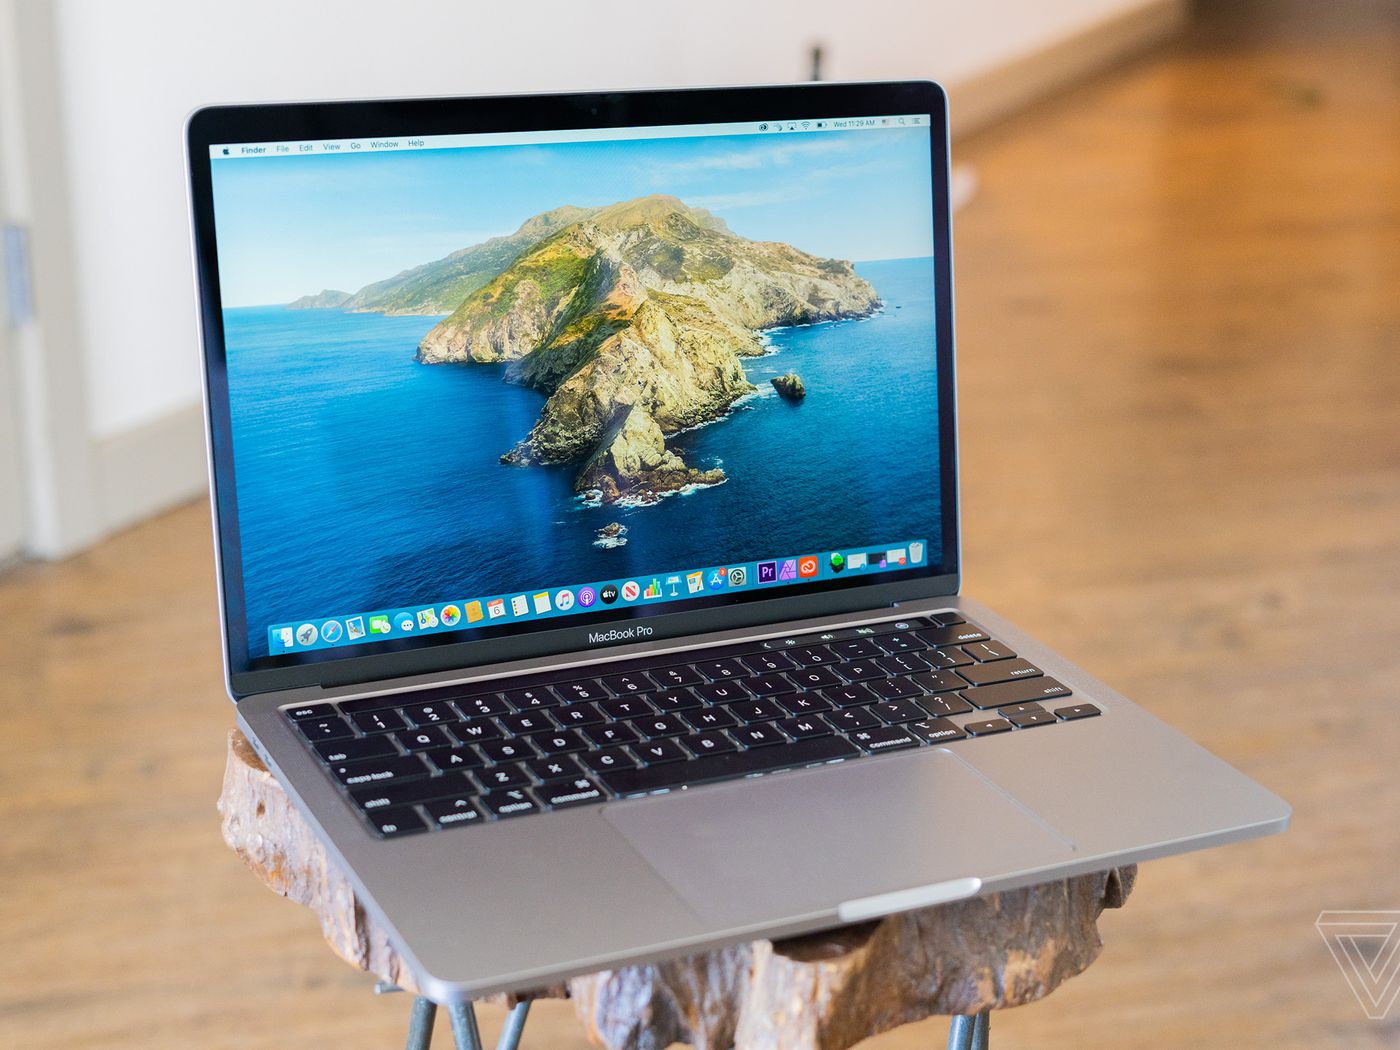 The new macbook pro 13 inch 2020